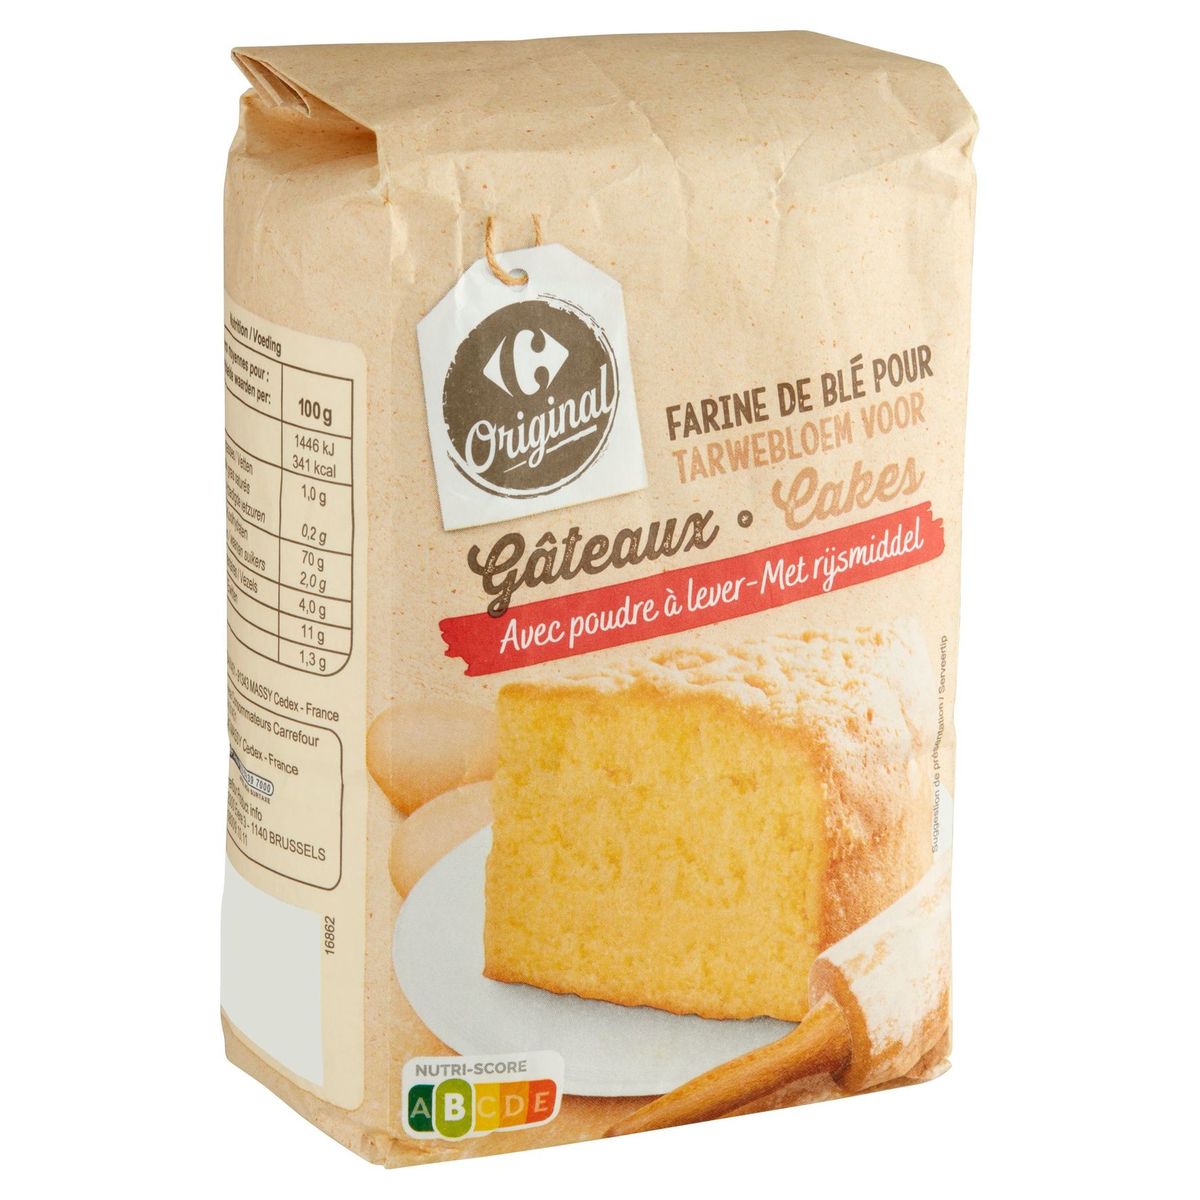 Carrefour Original Tarwebloem voor Cakes met Rijsmiddel 1 kg